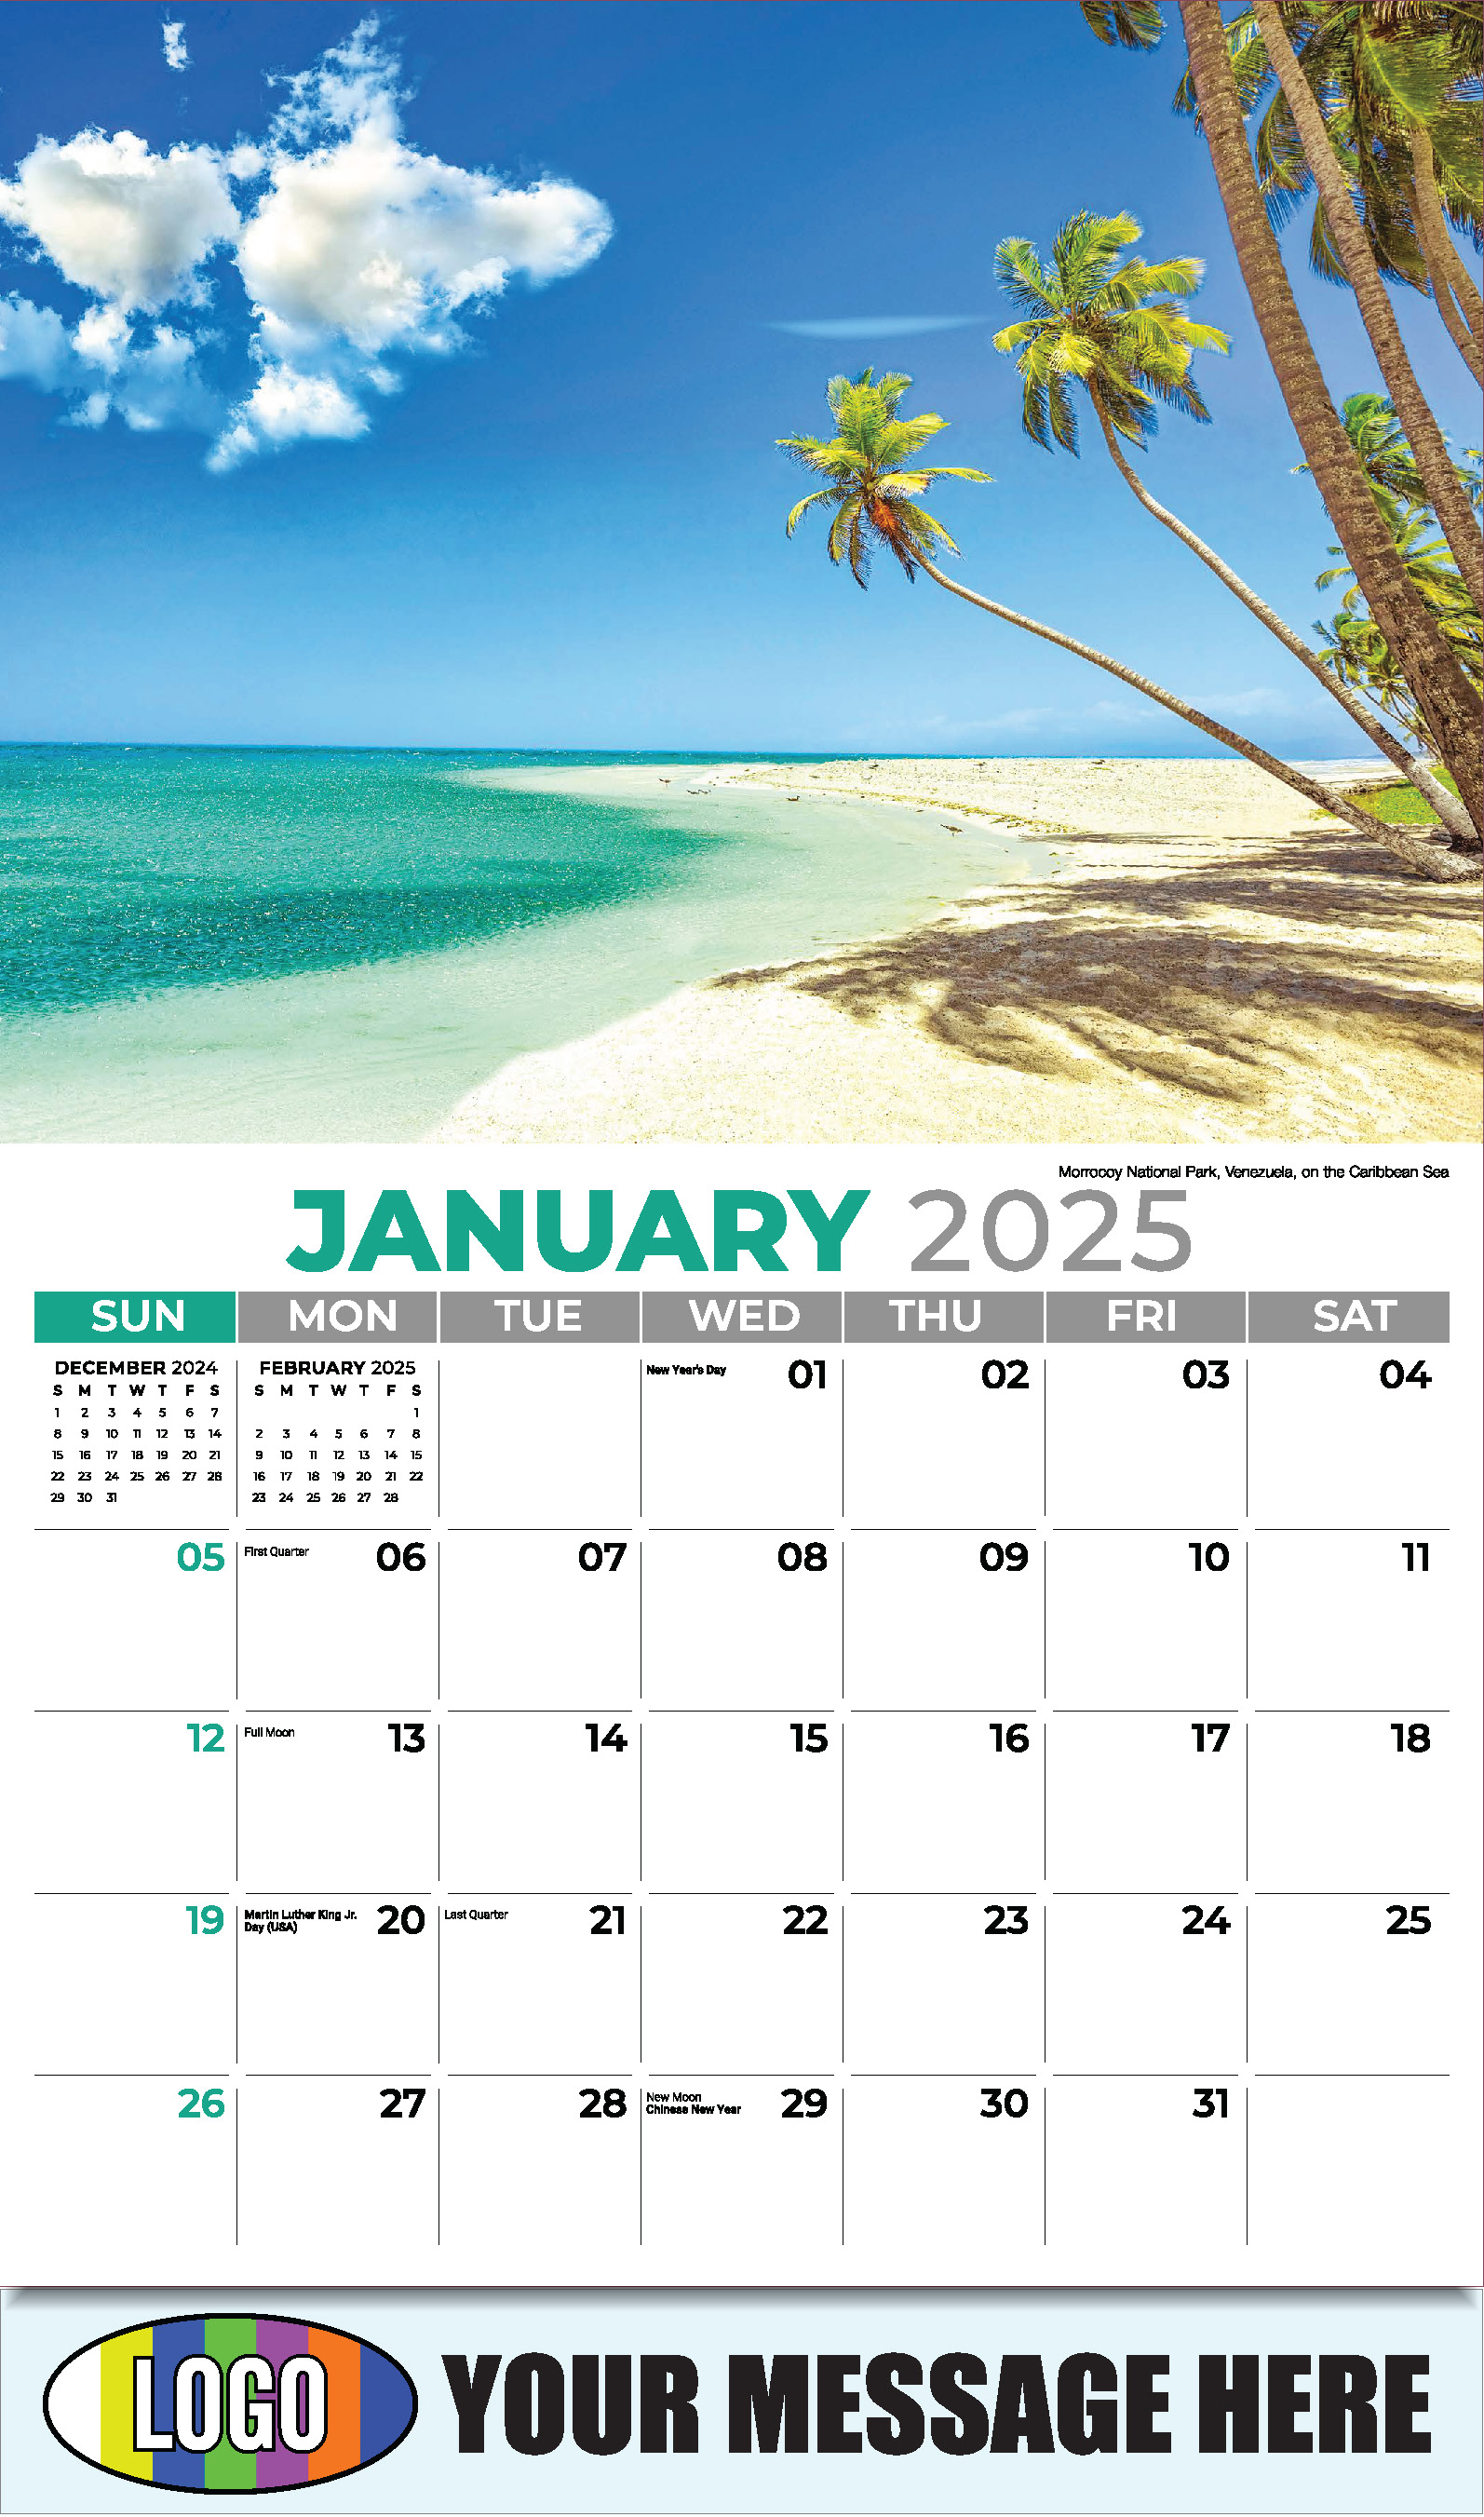 Sun, Sand and Surf 2025 Business Advertsing Wall Calendar - January